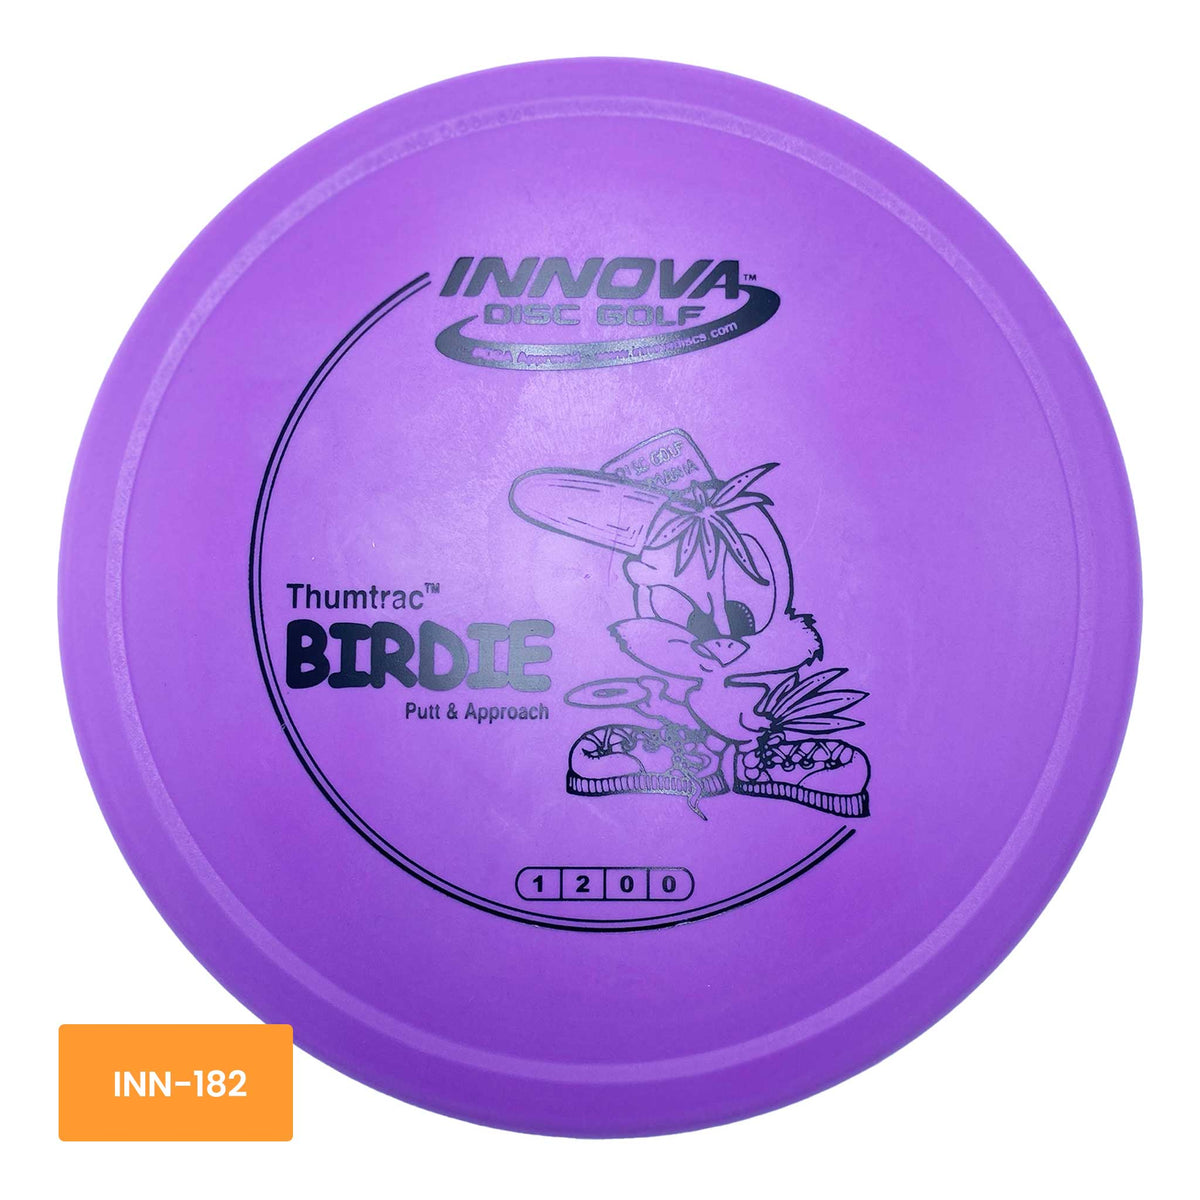 Innova Disc Golf DX Birdie putter and approach - Purple / Black